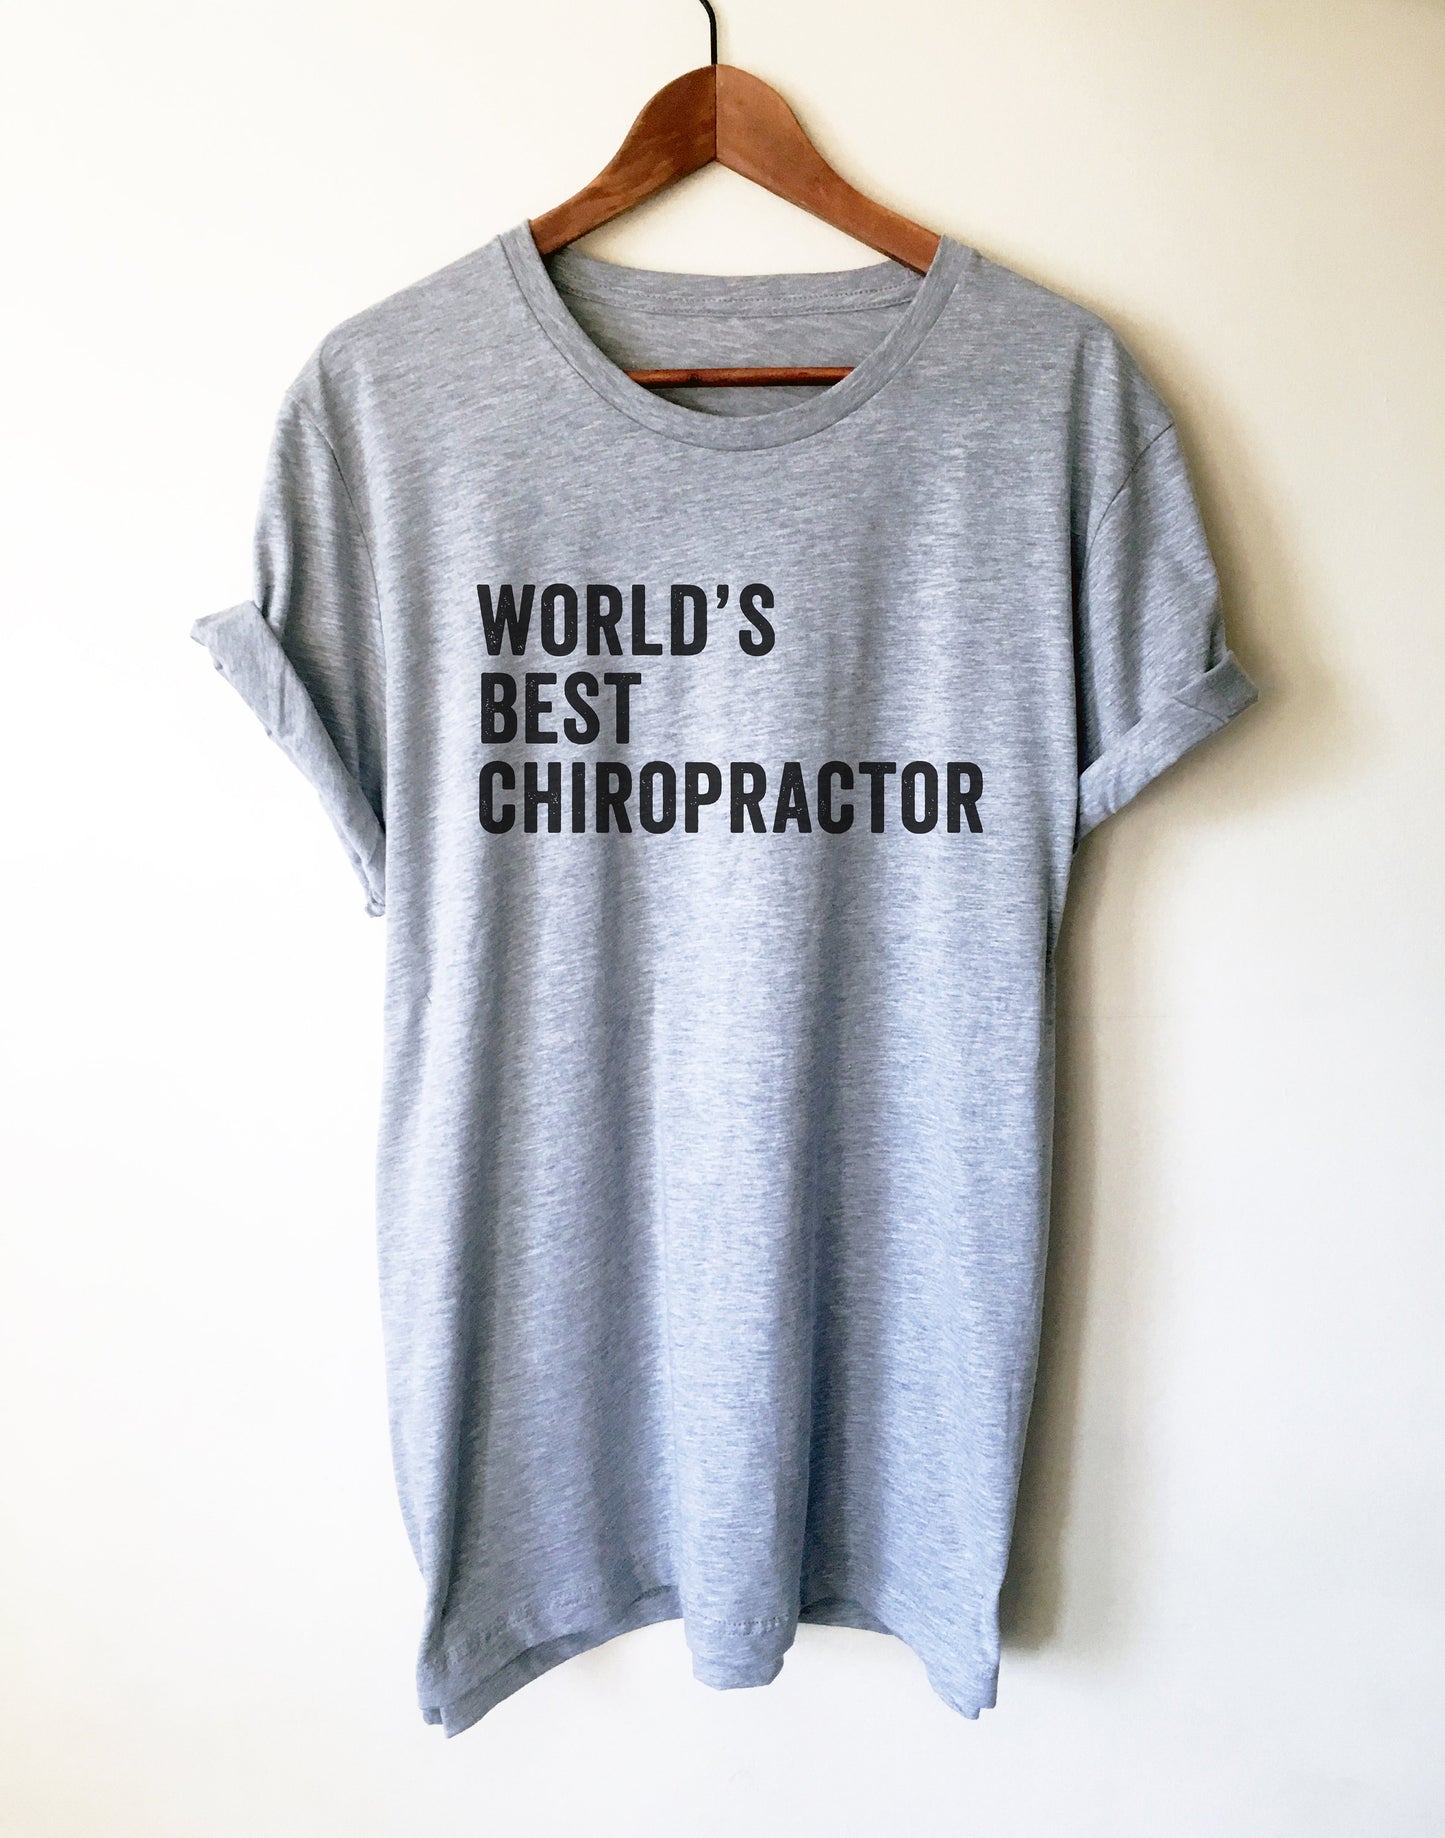 World's Best Chiropractor Unisex Shirt - Chiropractor Shirt, Chiropractor Gift, Chiropractor Student, Chiropractic Gift, Gift For Coworker